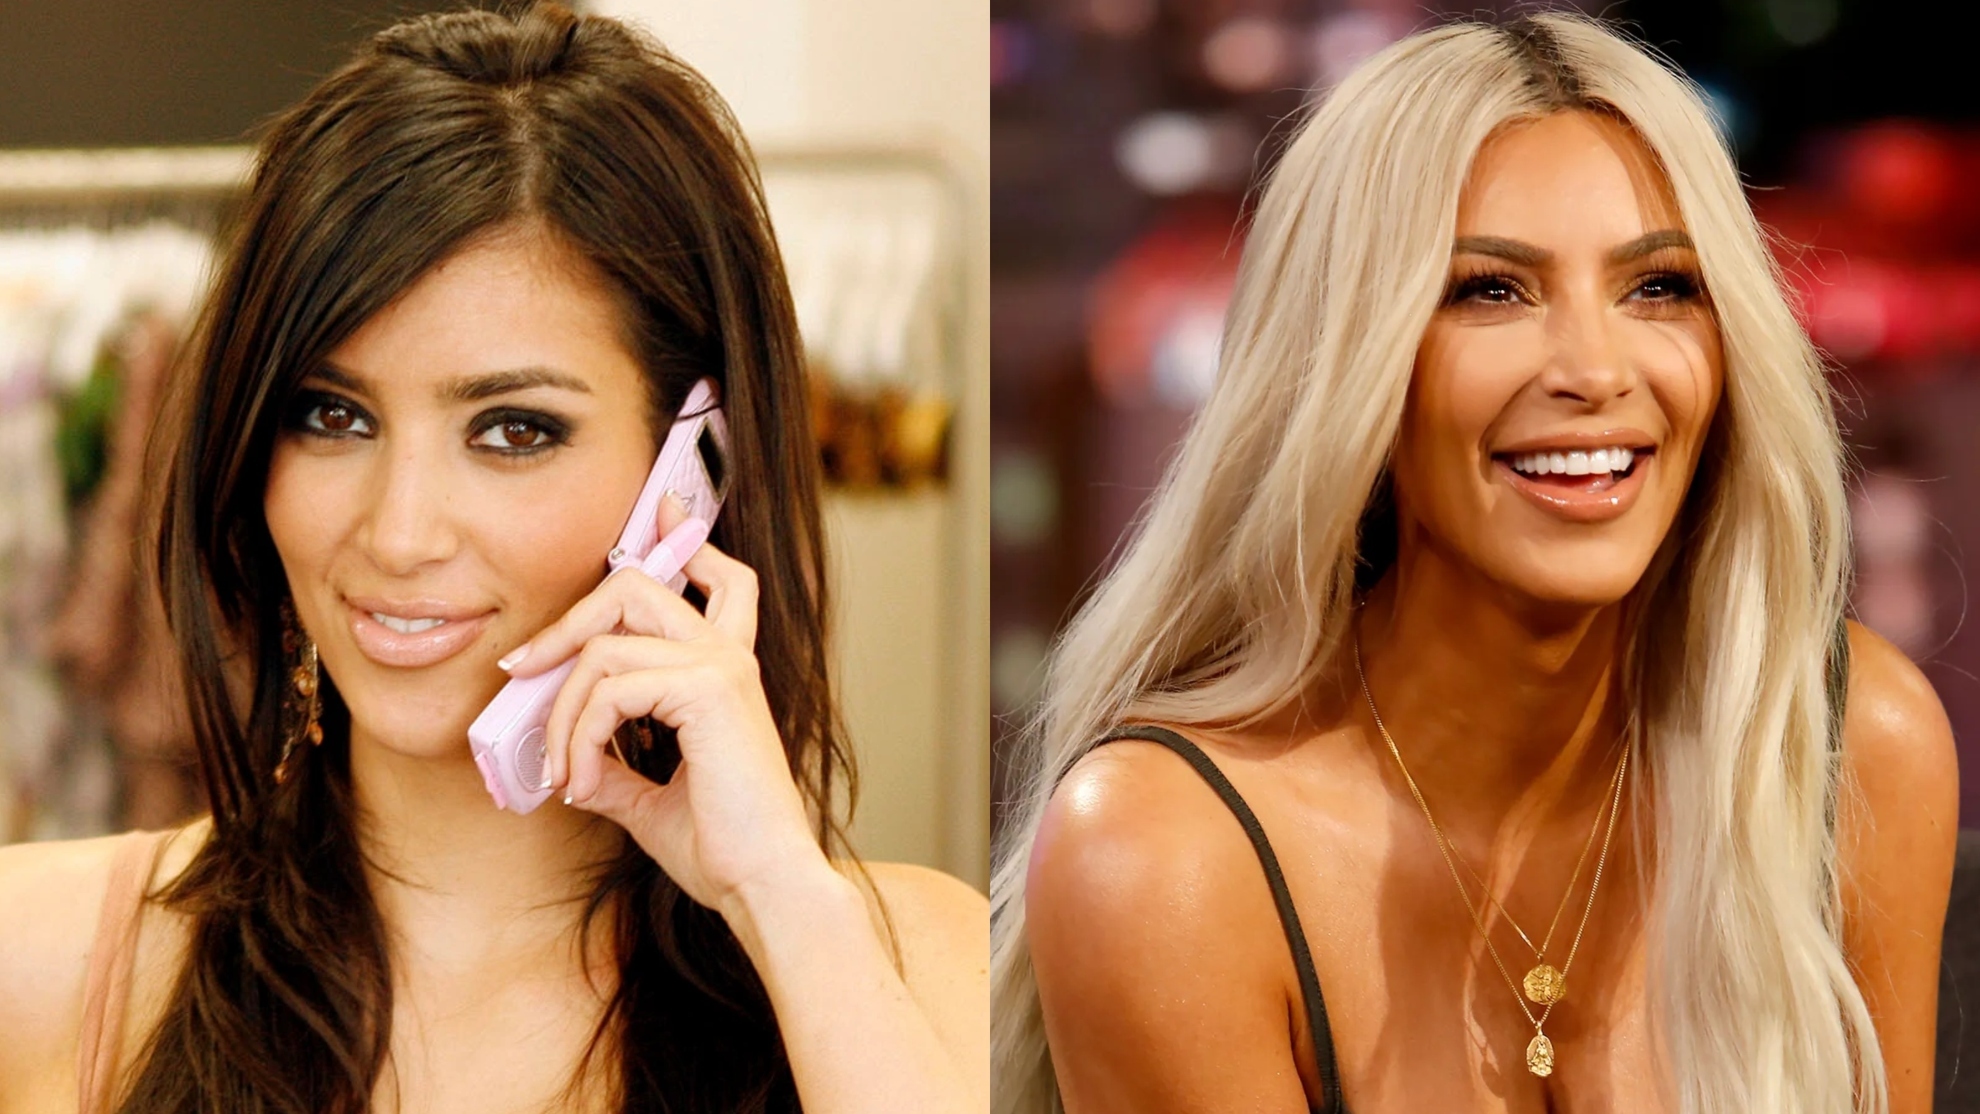 Kim Kardashian has drastically changed over the years